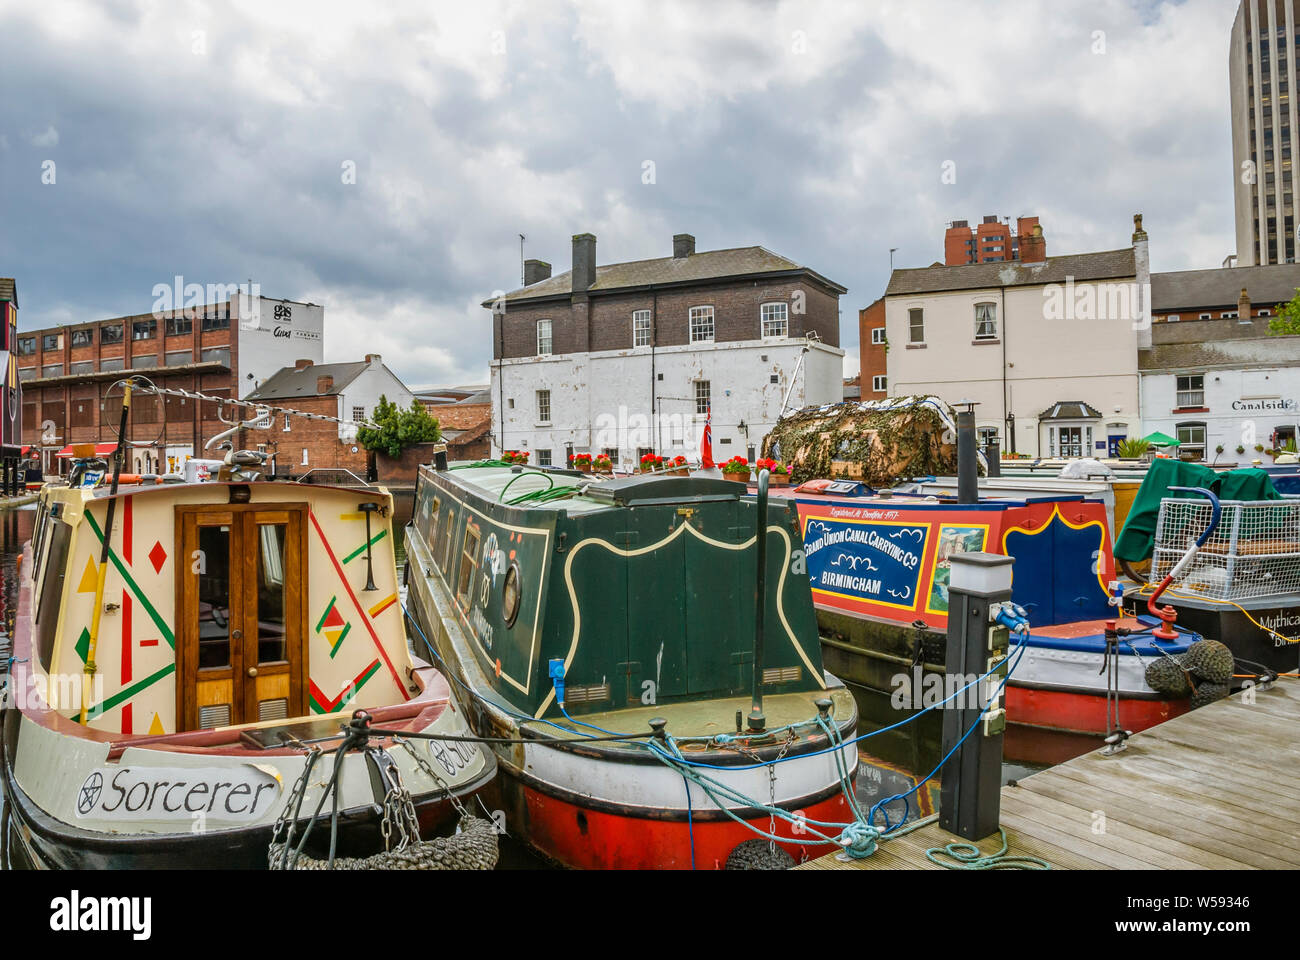 Gas Street Basin Narrow Boat Marina, a canal basin in the centre of Birmingham, England Stock Photo